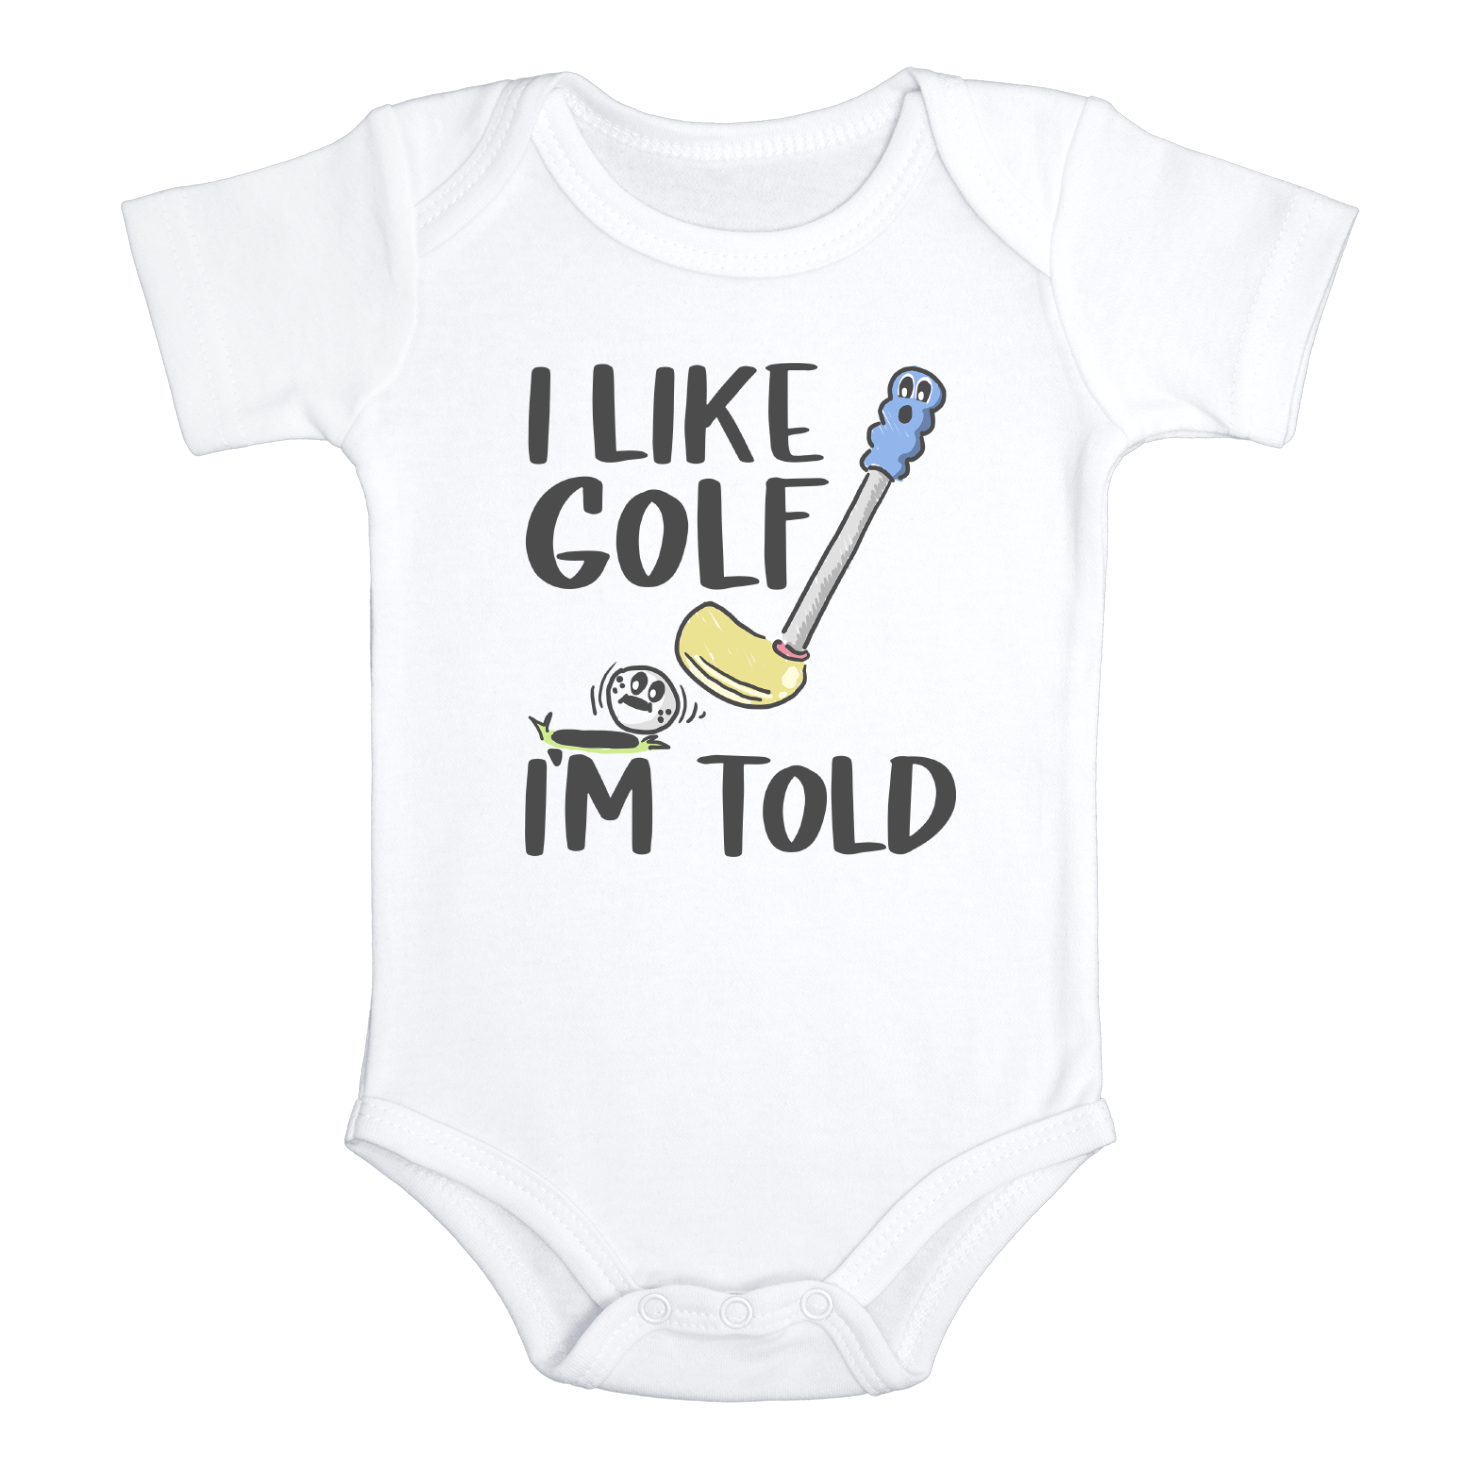 I LIKE GOLF I'M TOLD Funny Baby Bodysuit Cute Golf Onesie White